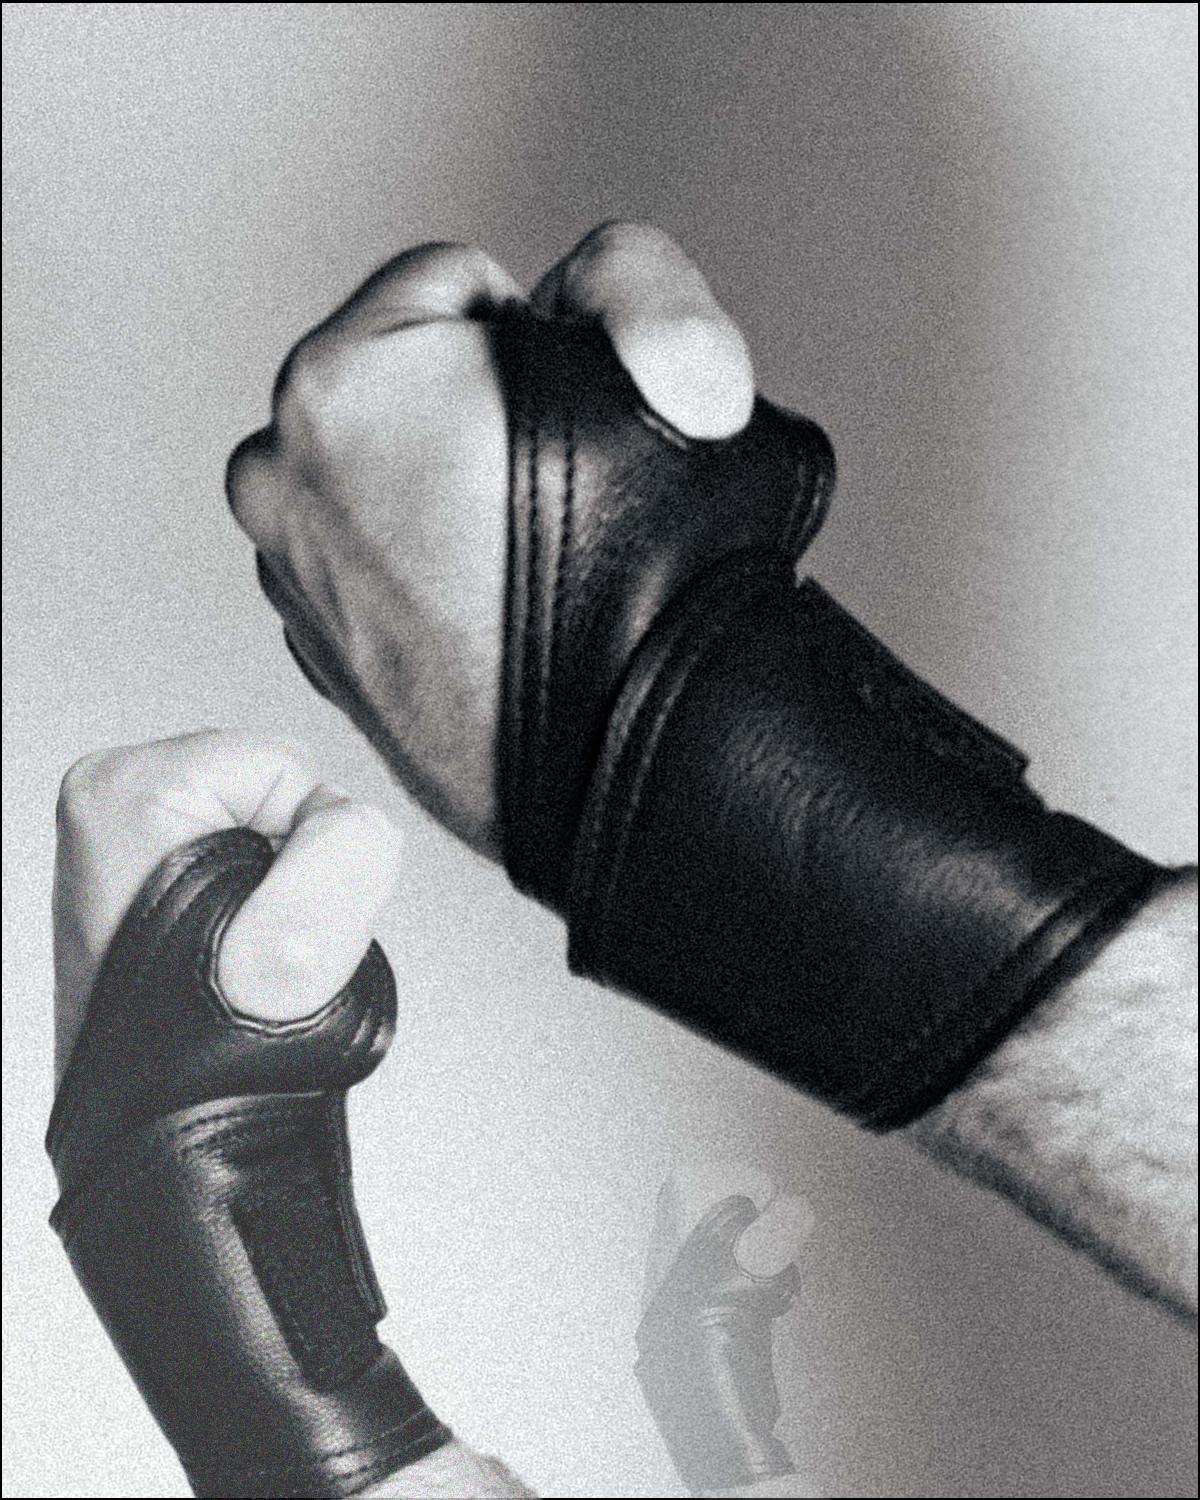 T2W (Thumb to Wrist) Wristband